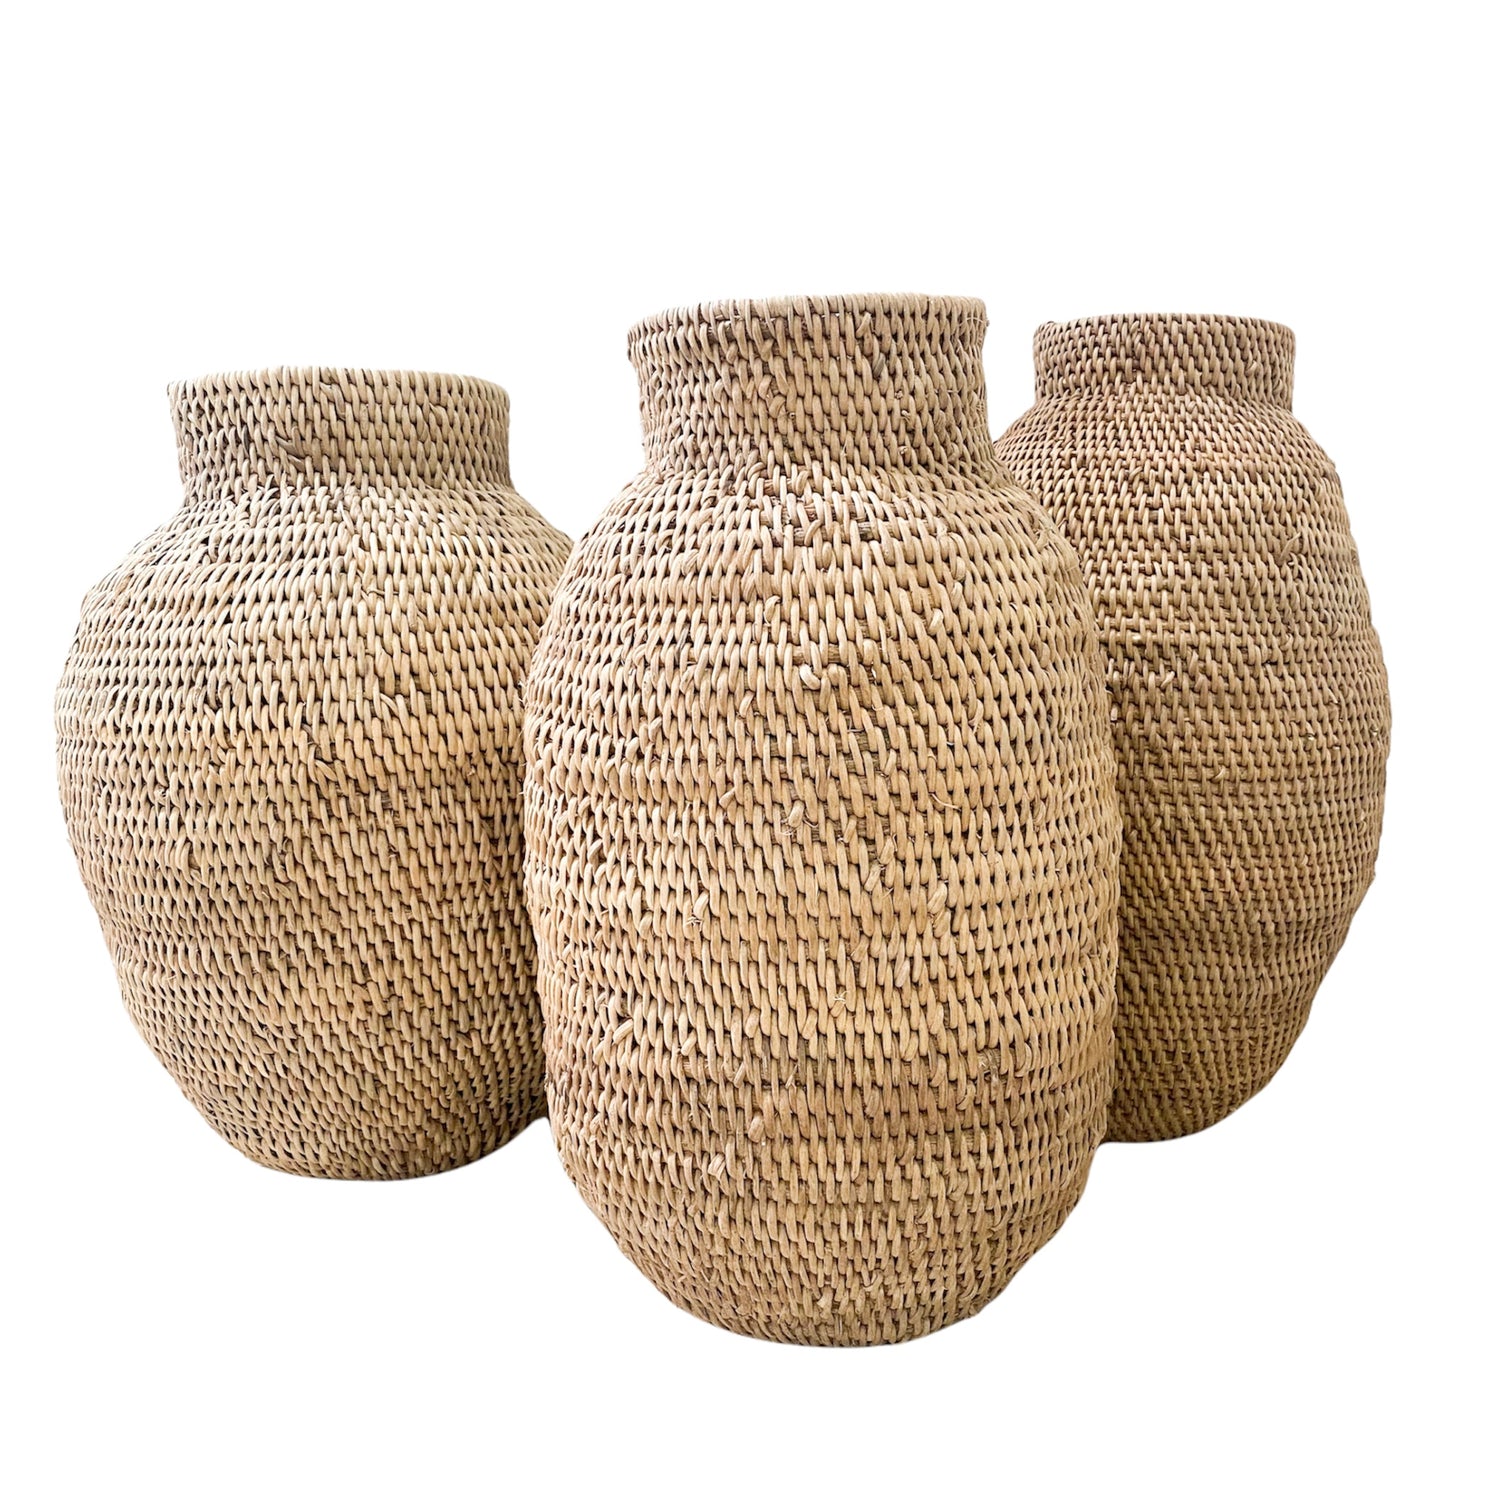 Buhera African Grass Reed Baskets 